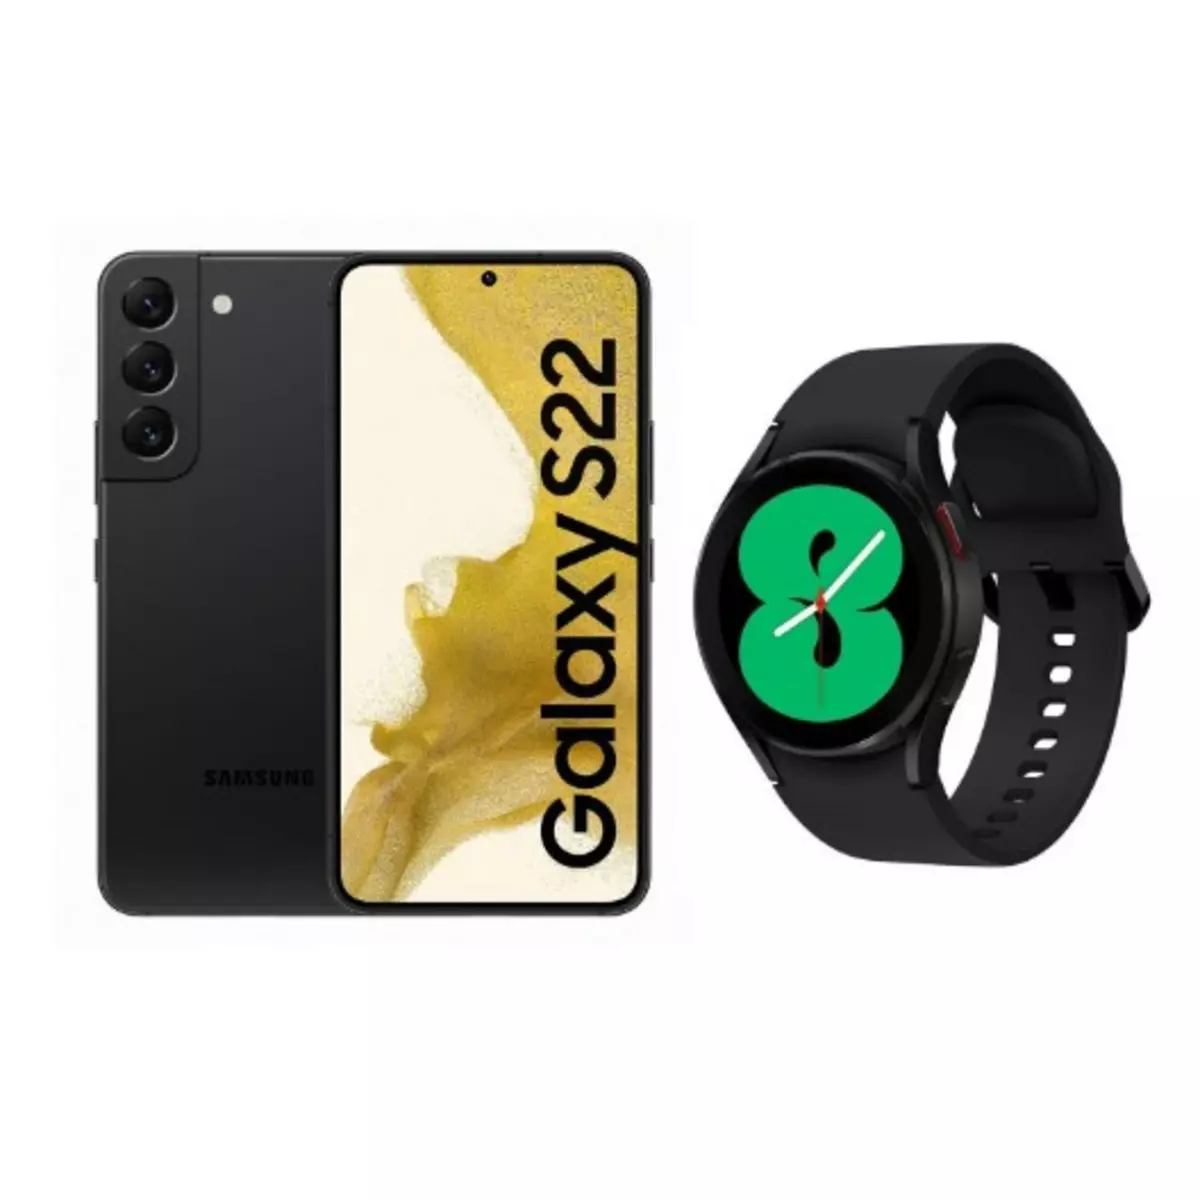 SAMSUNG Galaxy S22 128 Go Noir + Montre connectée Samsung Watch 4 40 mm Noir